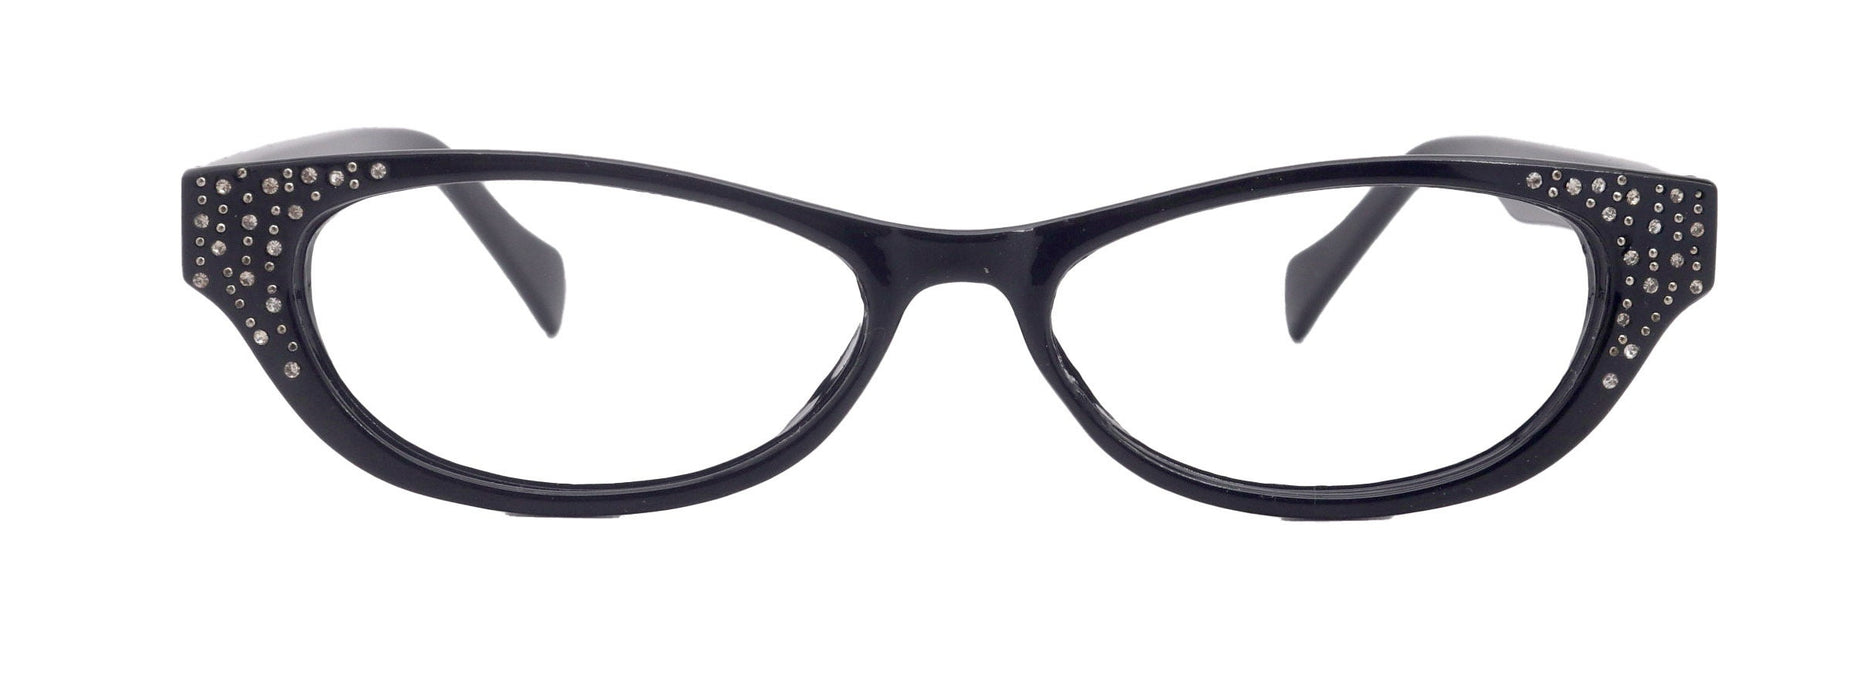 Premium Reading Glasses High End Reading Glass Black +1.25 to +3.00 magnifying glasses, Cat Eye. optical Frames